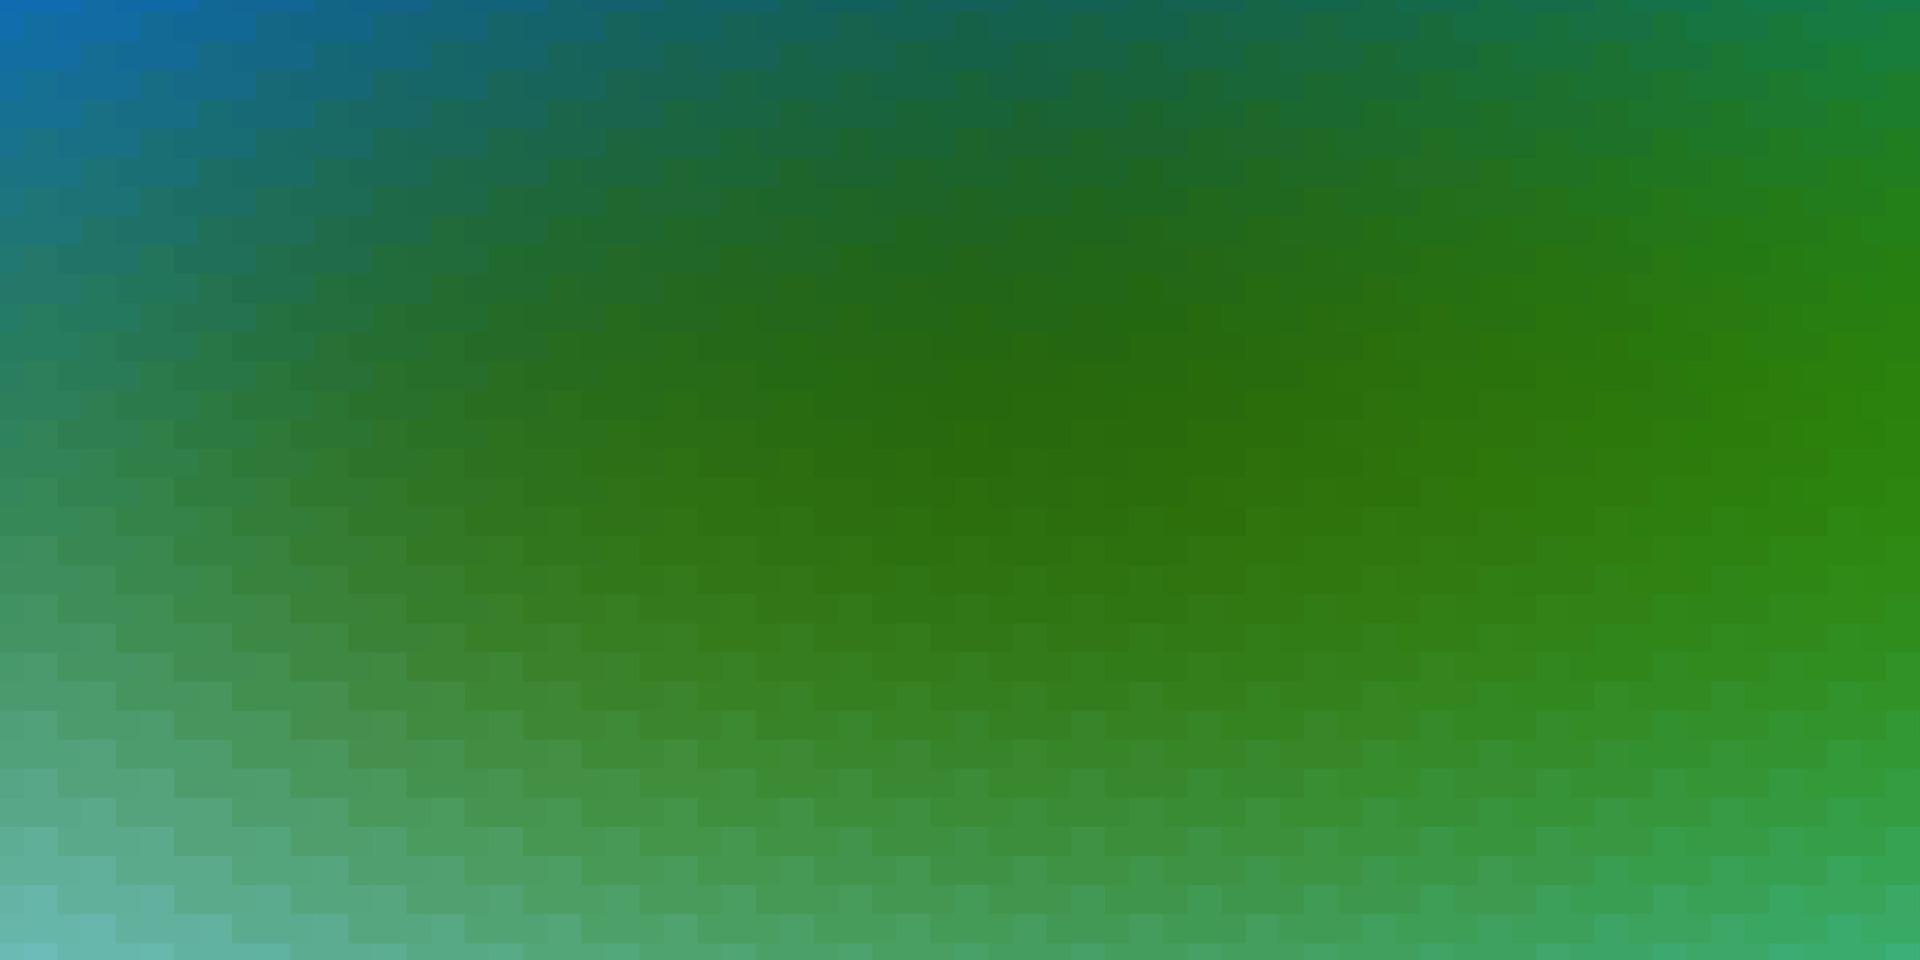 layout vettoriale azzurro, verde con linee, rettangoli.